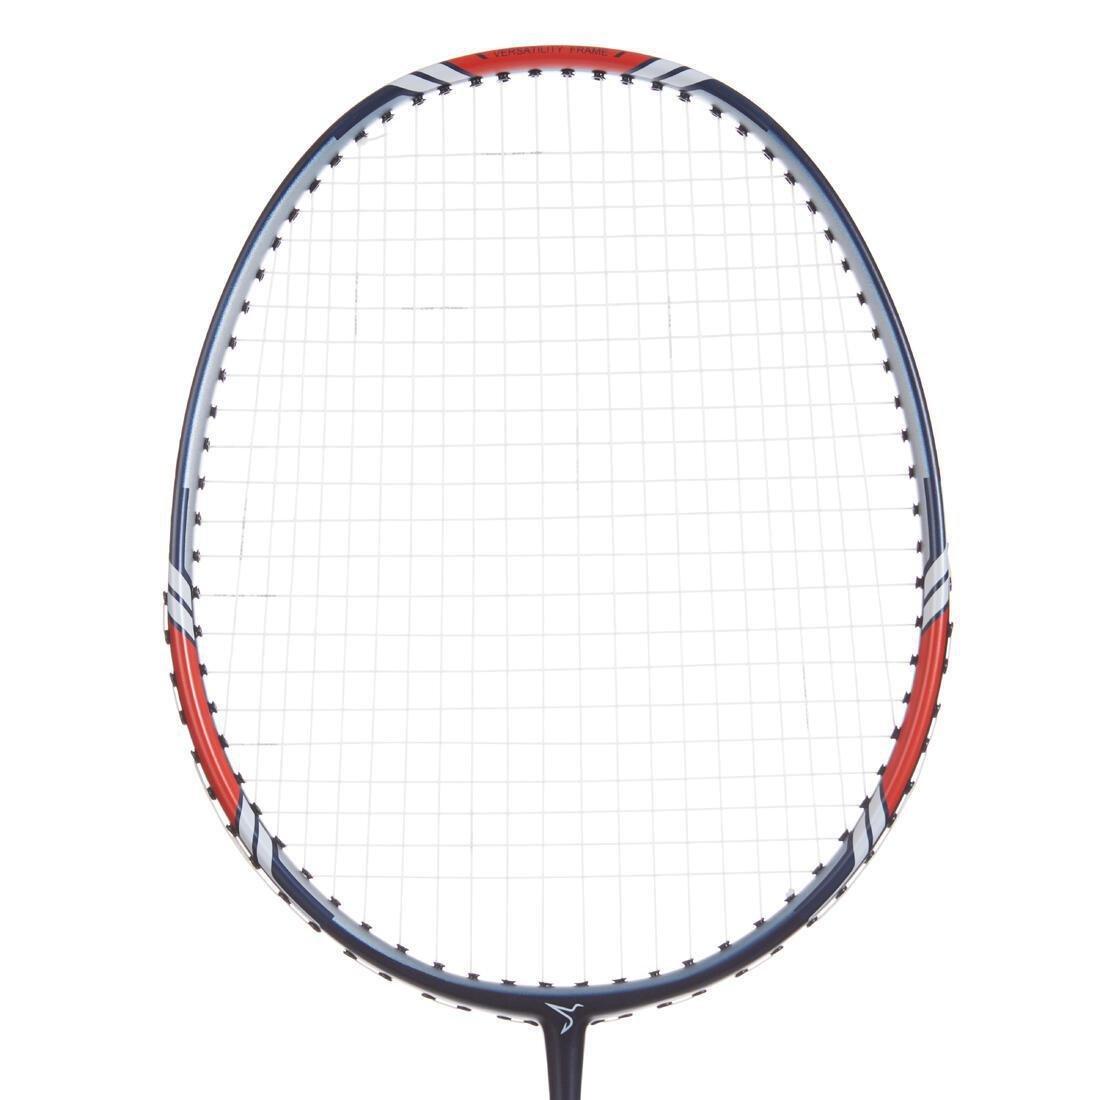 PERFLY - Adult Badminton Racket - Br 160, Navy